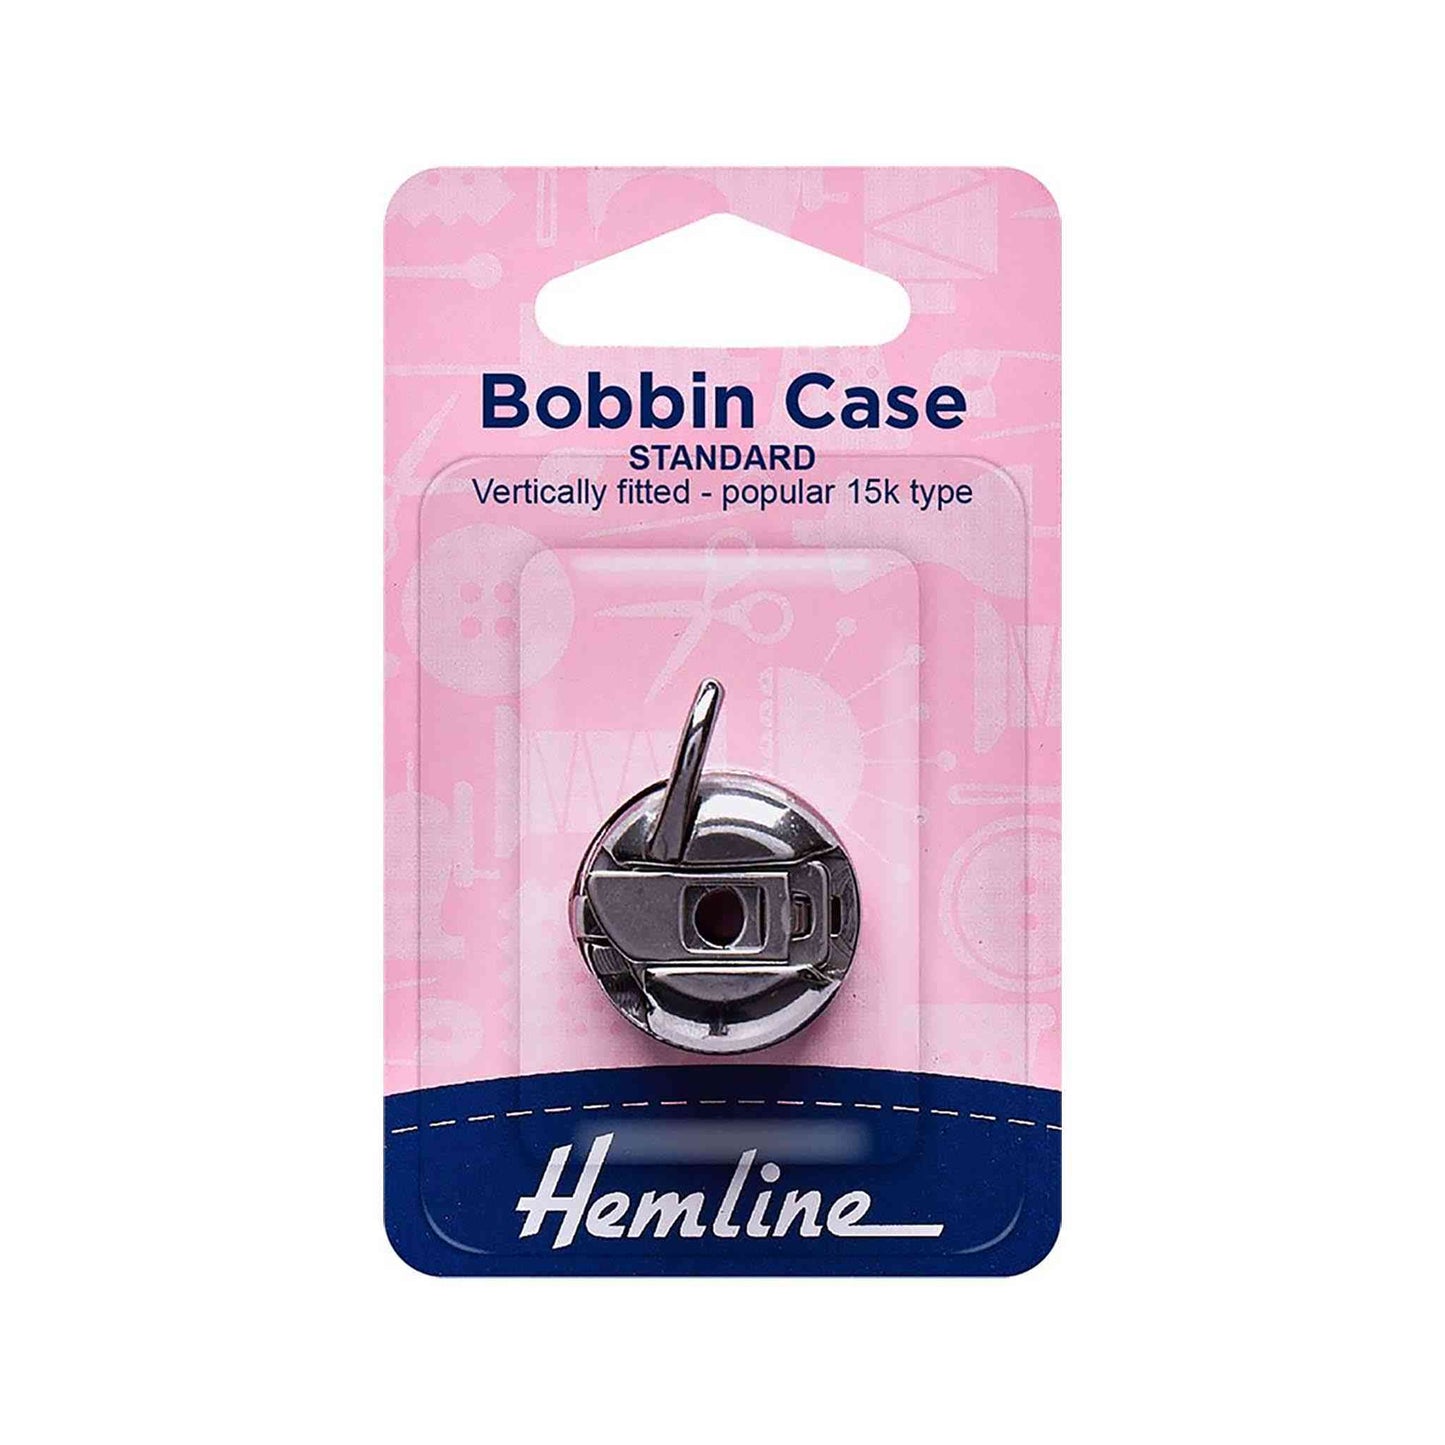 Bobbin Case (Standard 15k Type)